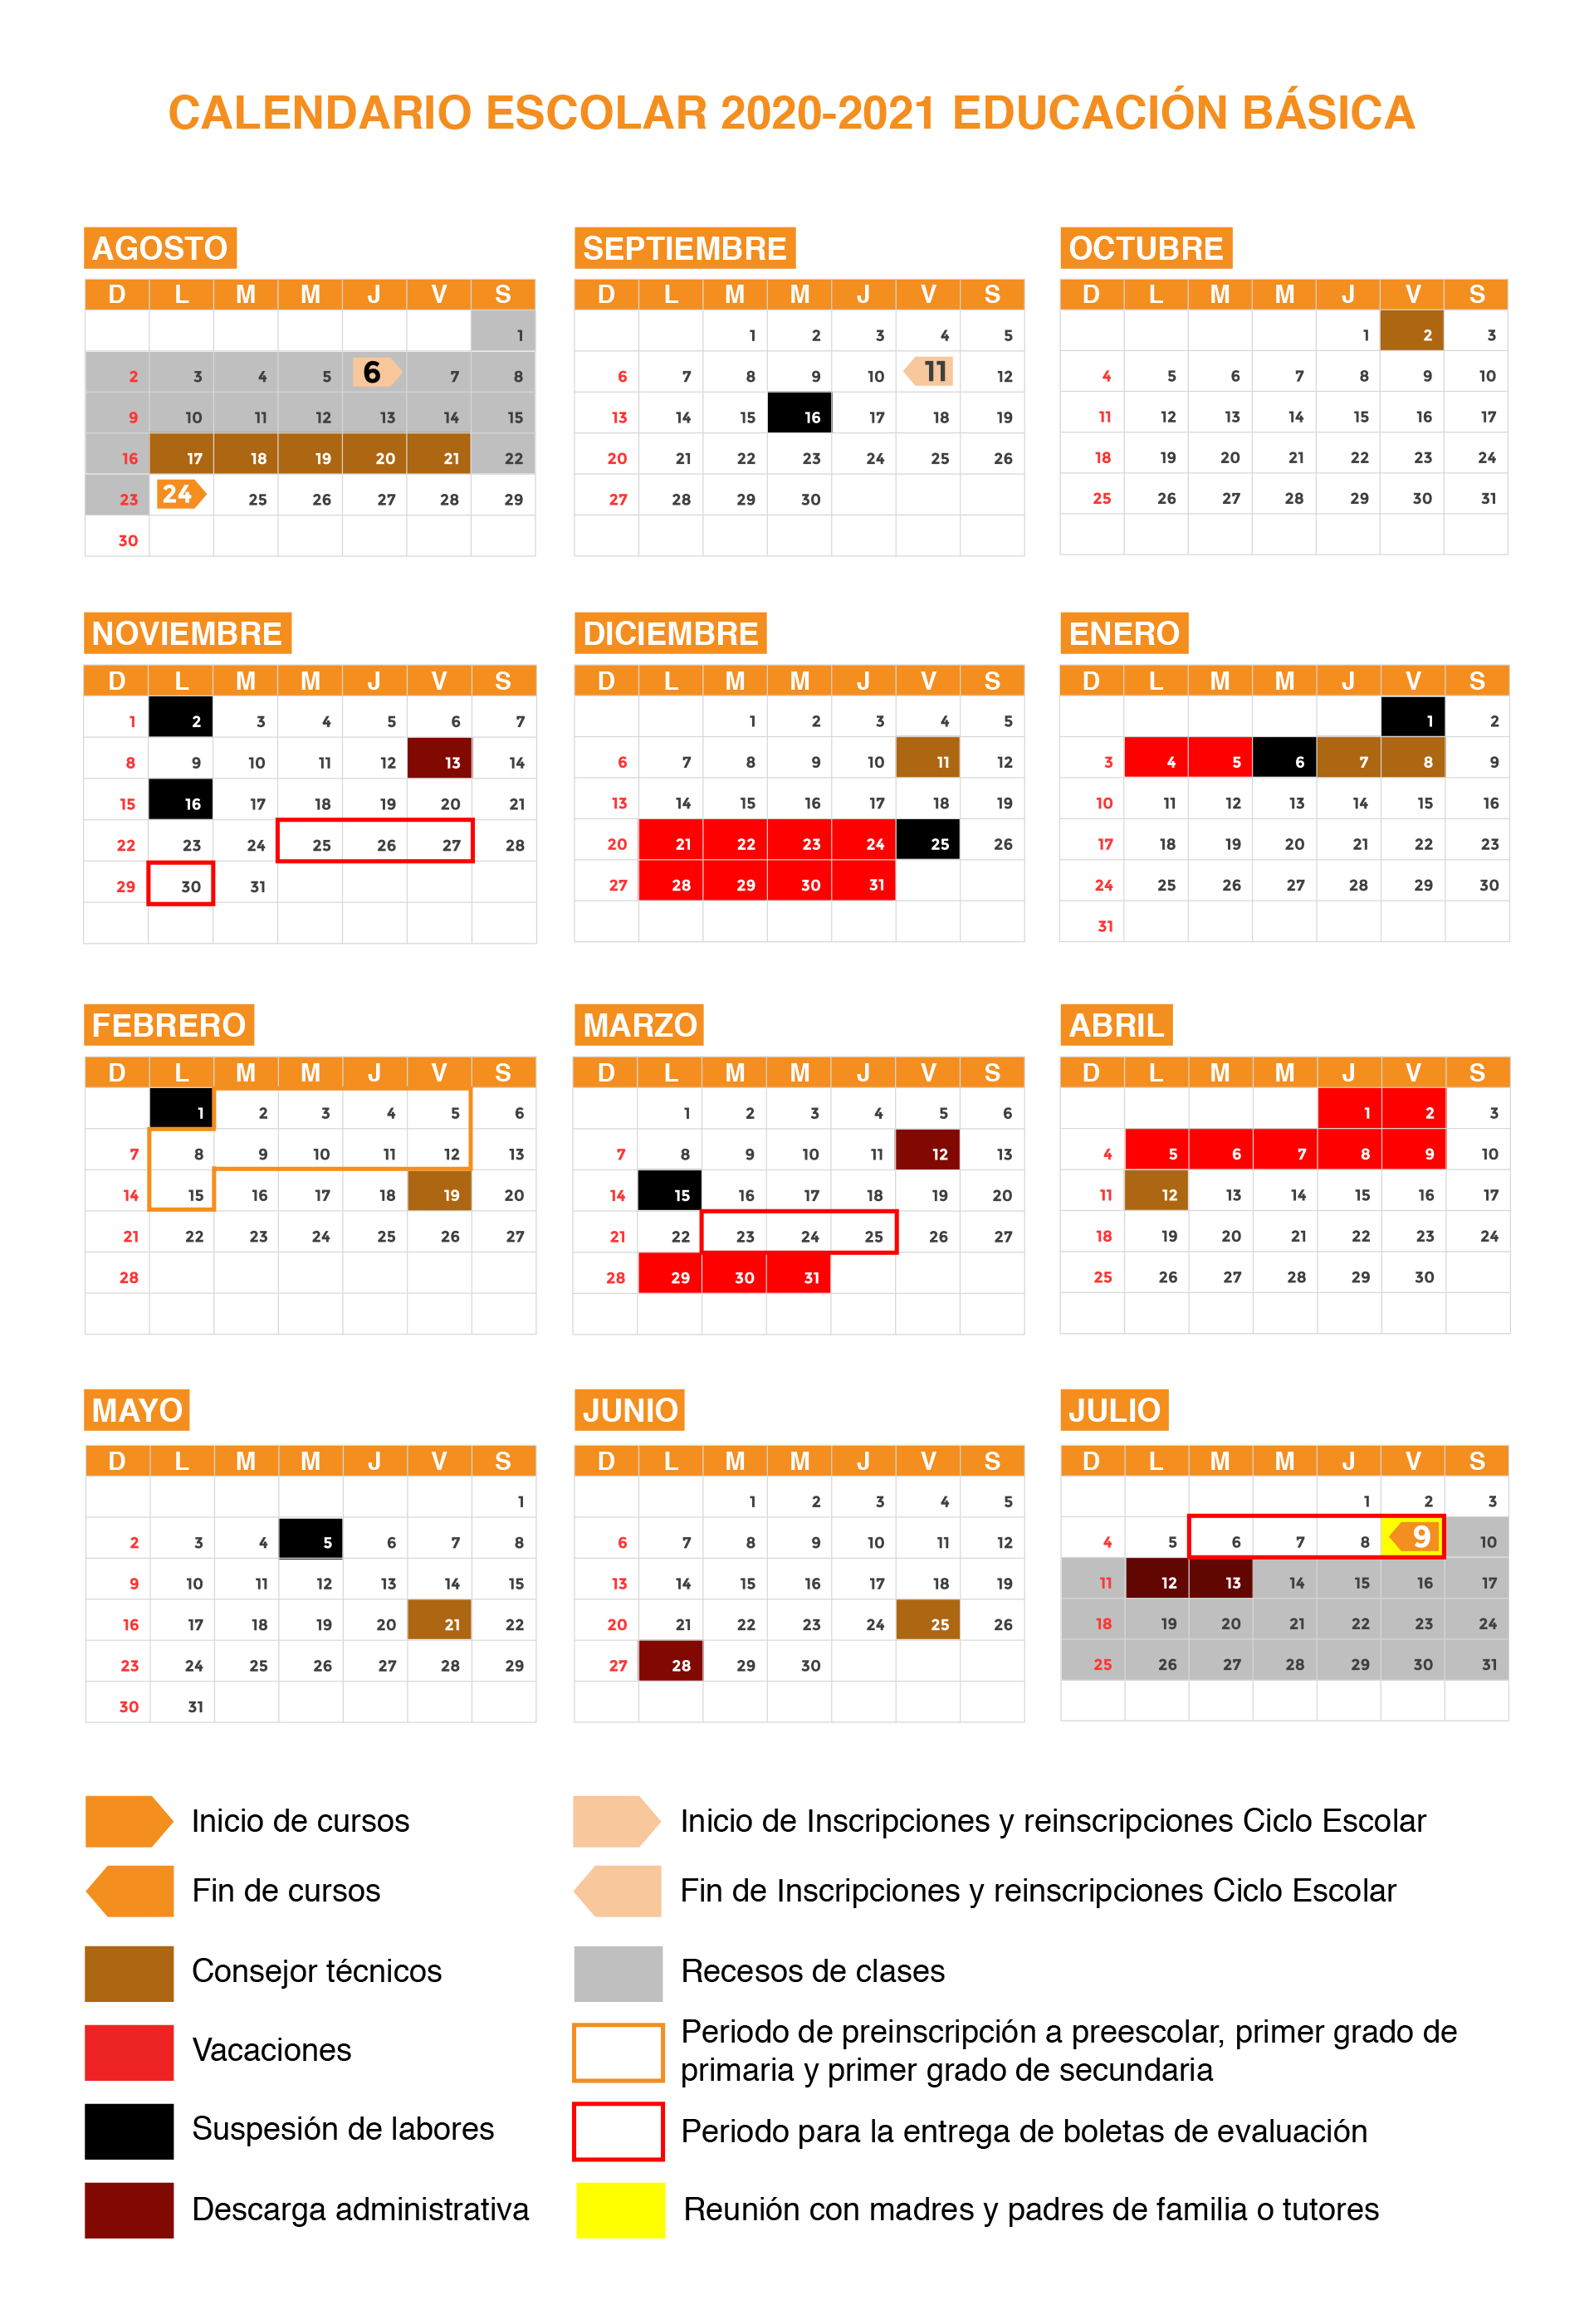 Calendario oficial de la SEP. (Imagen: Infobae)